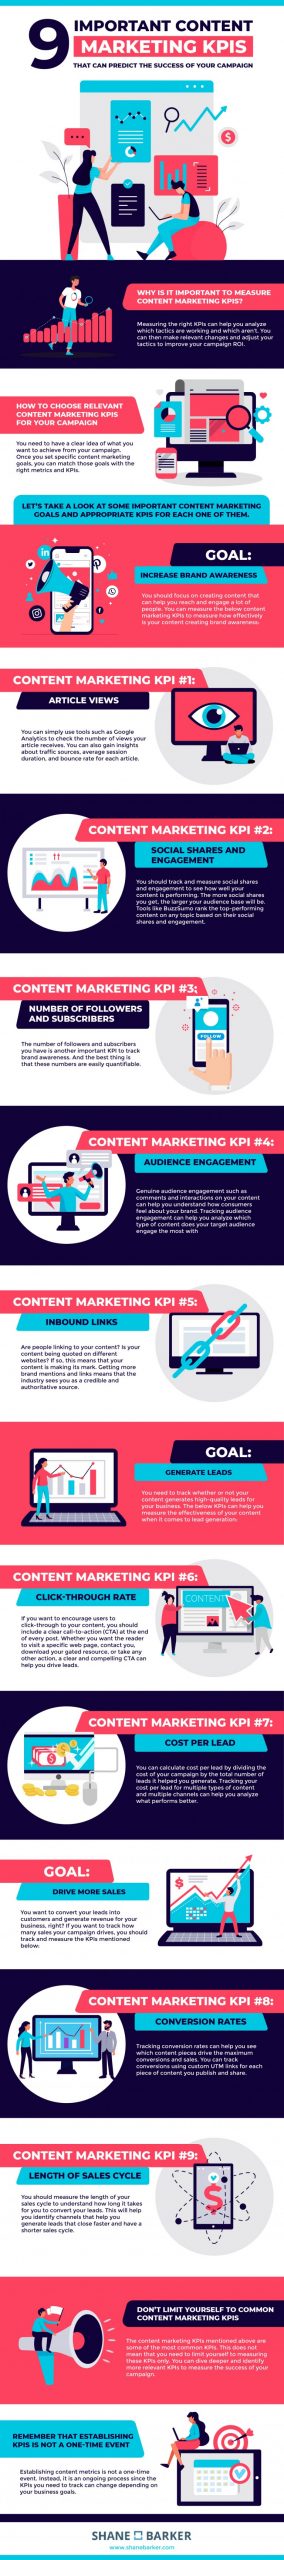 9 Important Content Marketing KPIs Infographic